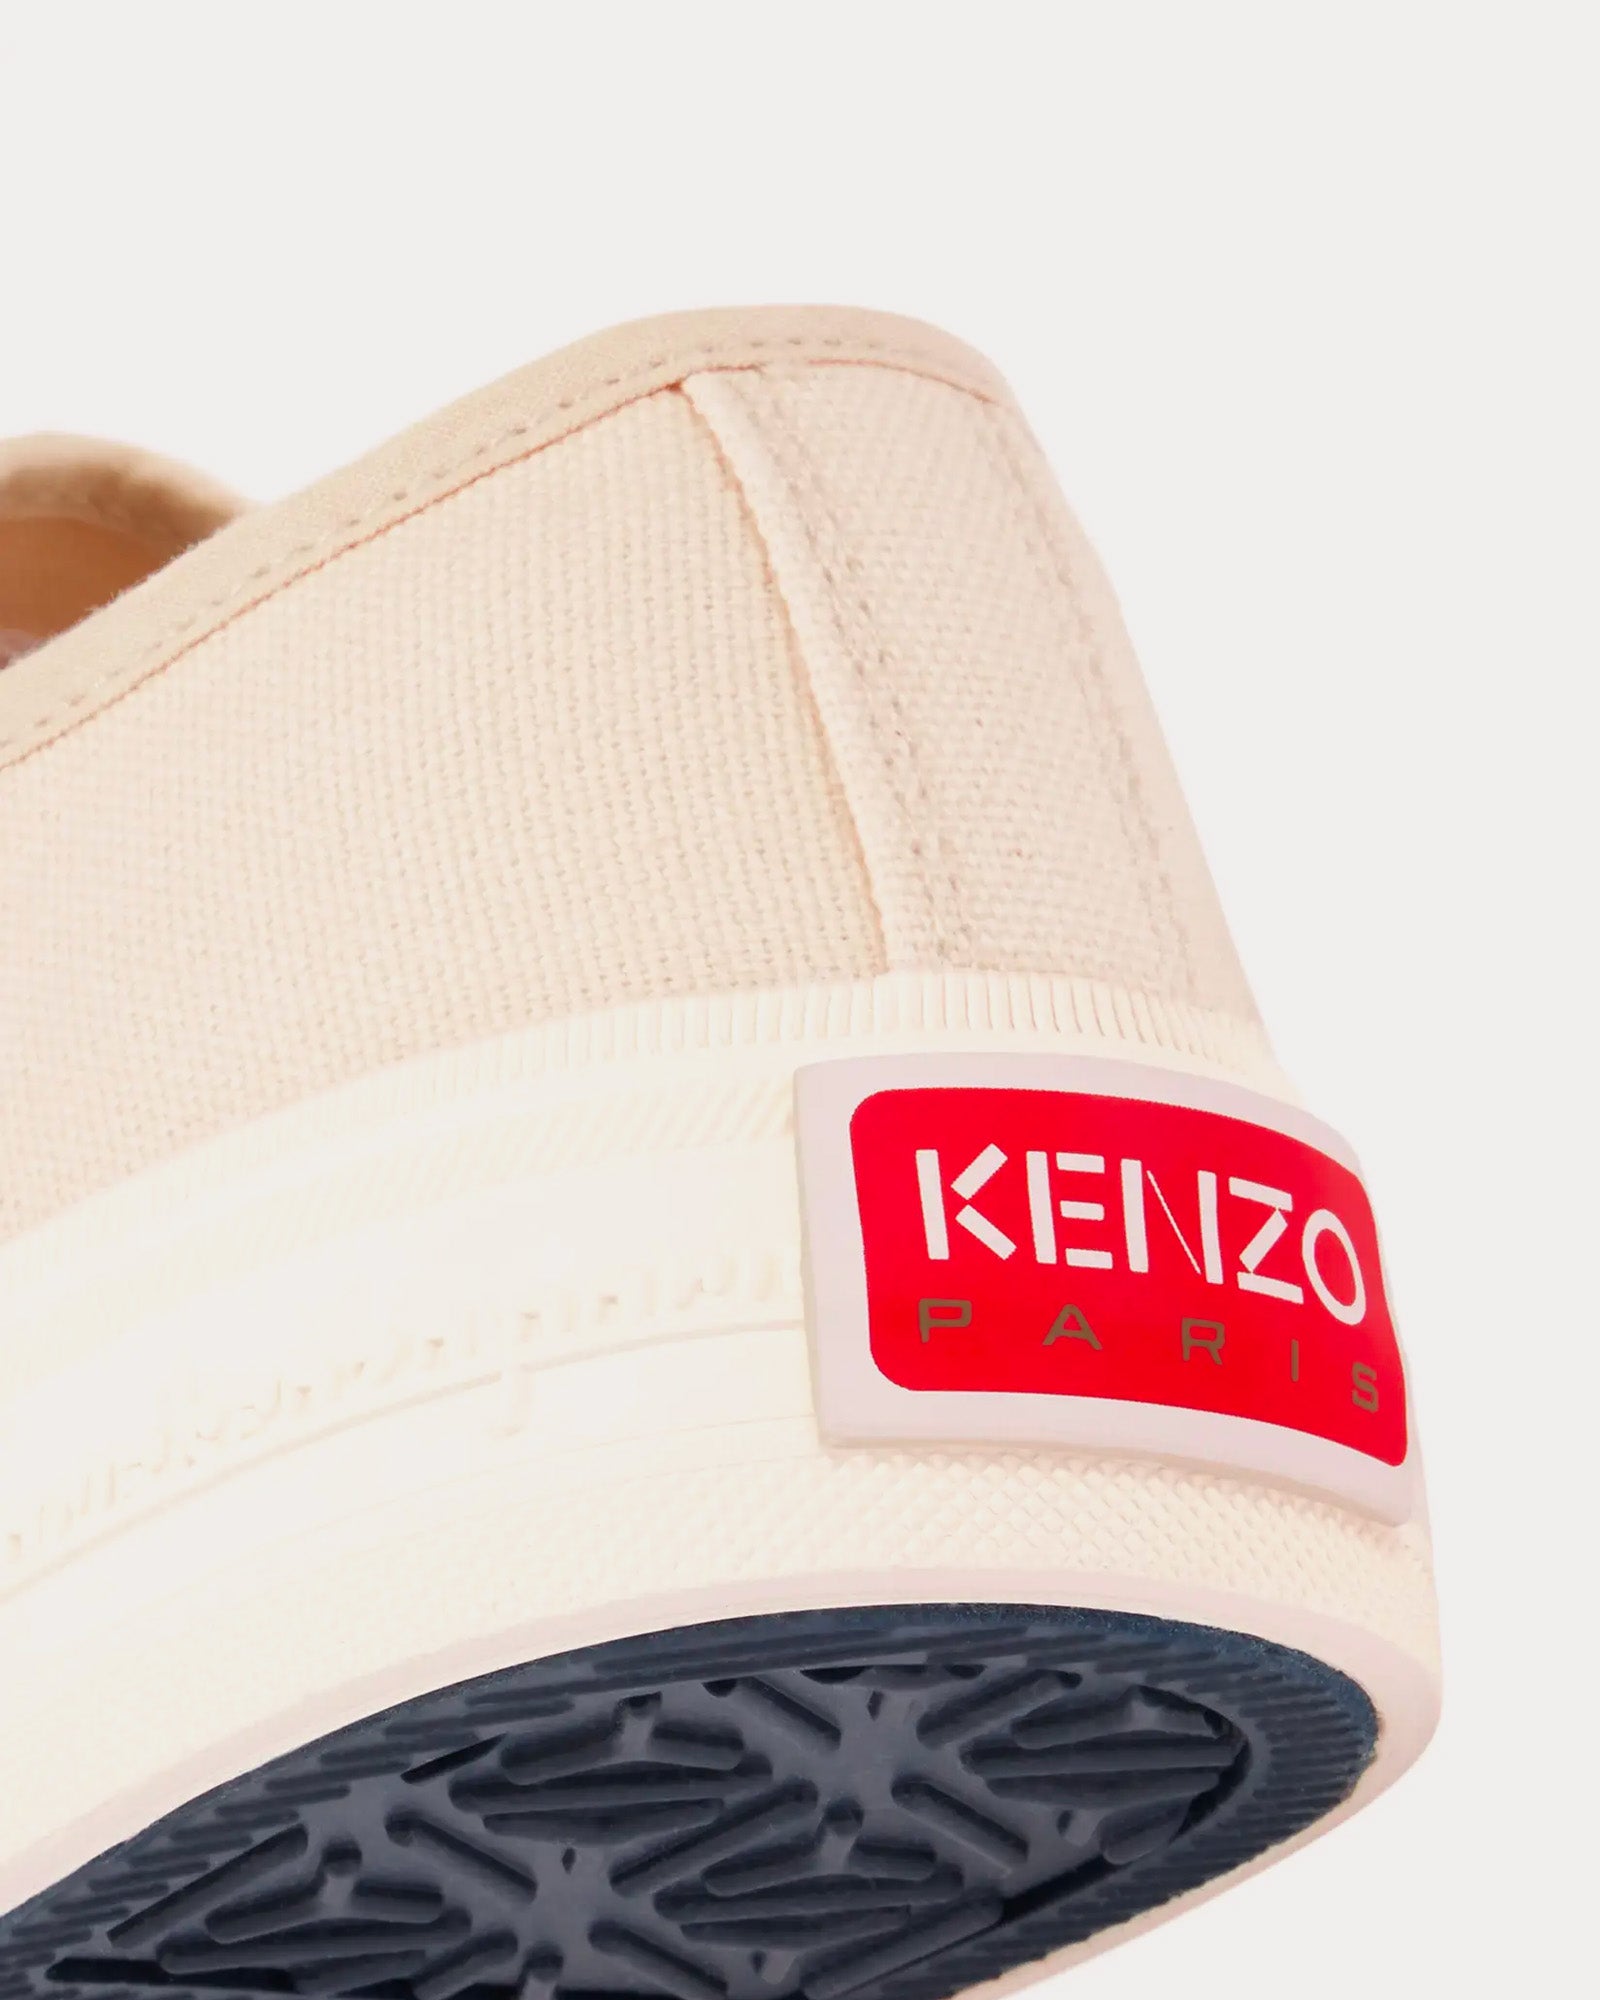 Kenzo - Kenzo Foxy Canvas Cream Low Top Sneakers